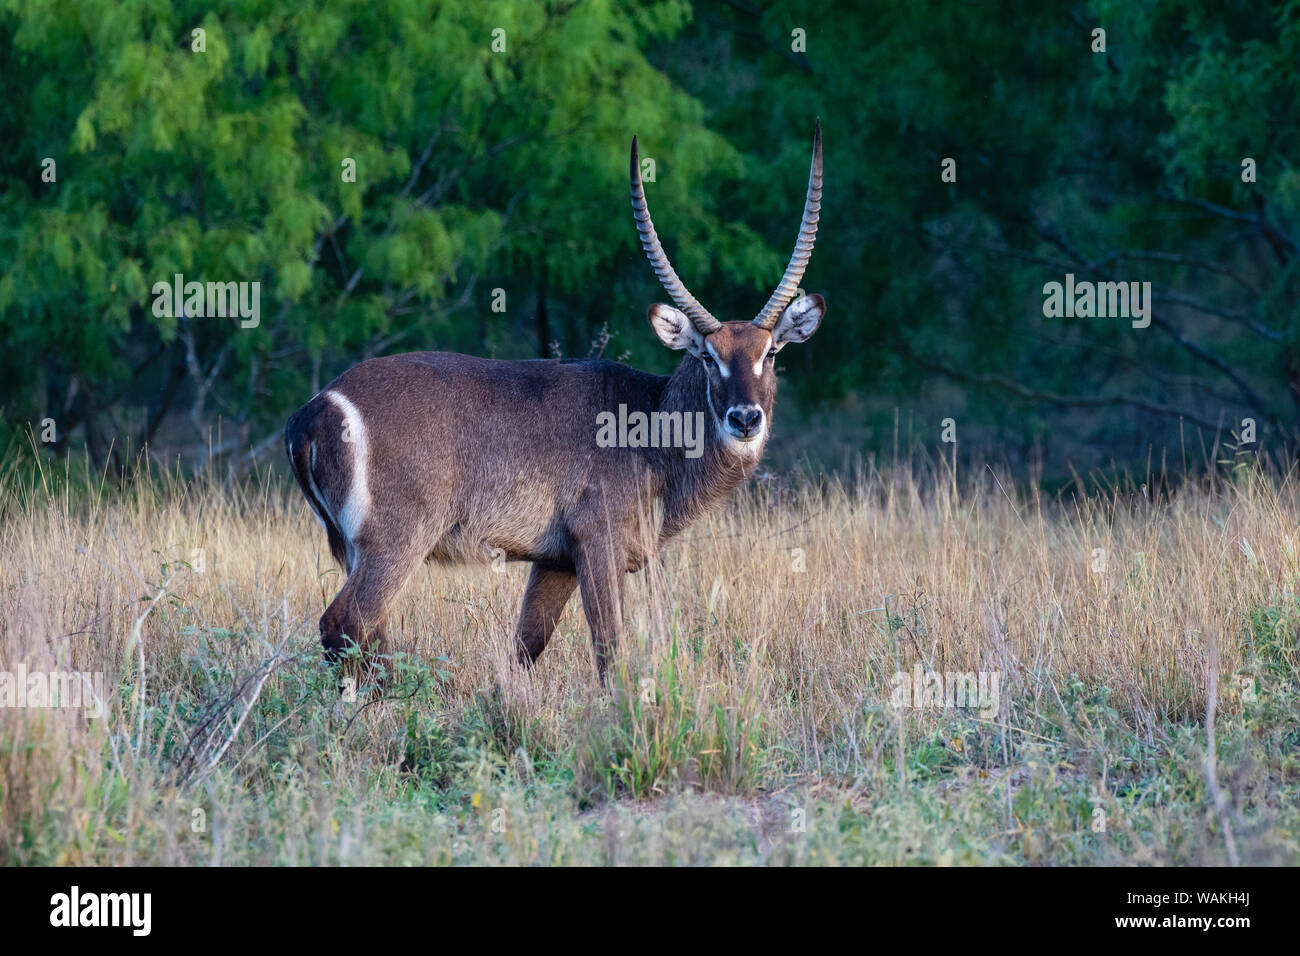 Antelope (Kobus ellipsiprymnus) en pastizales. Foto de stock